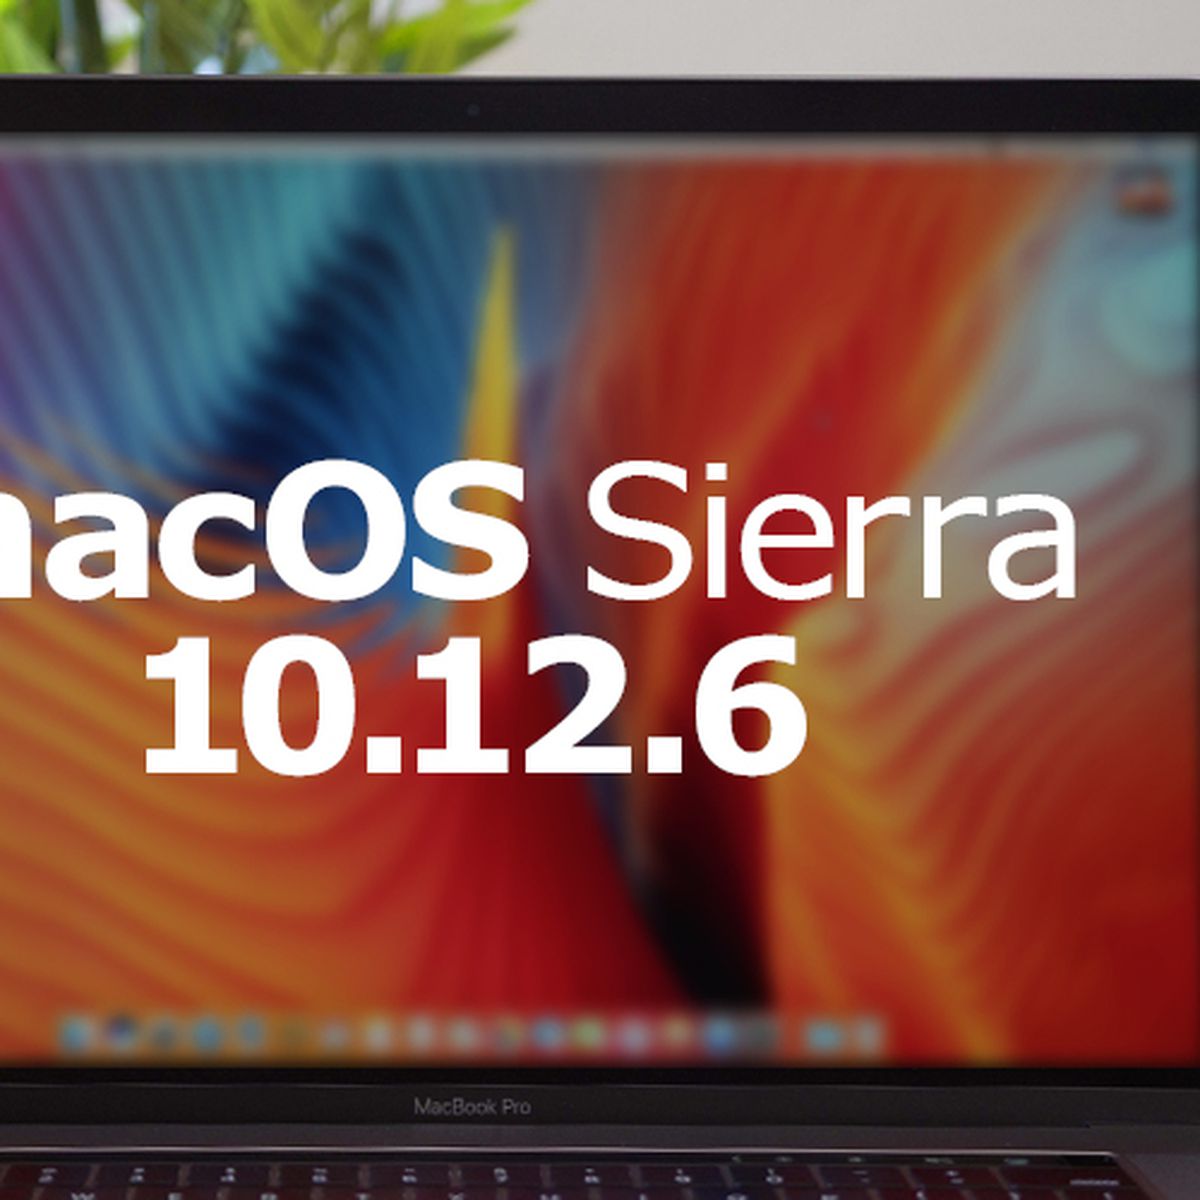 how much storage will the mac os sierra 10.12.6 update use